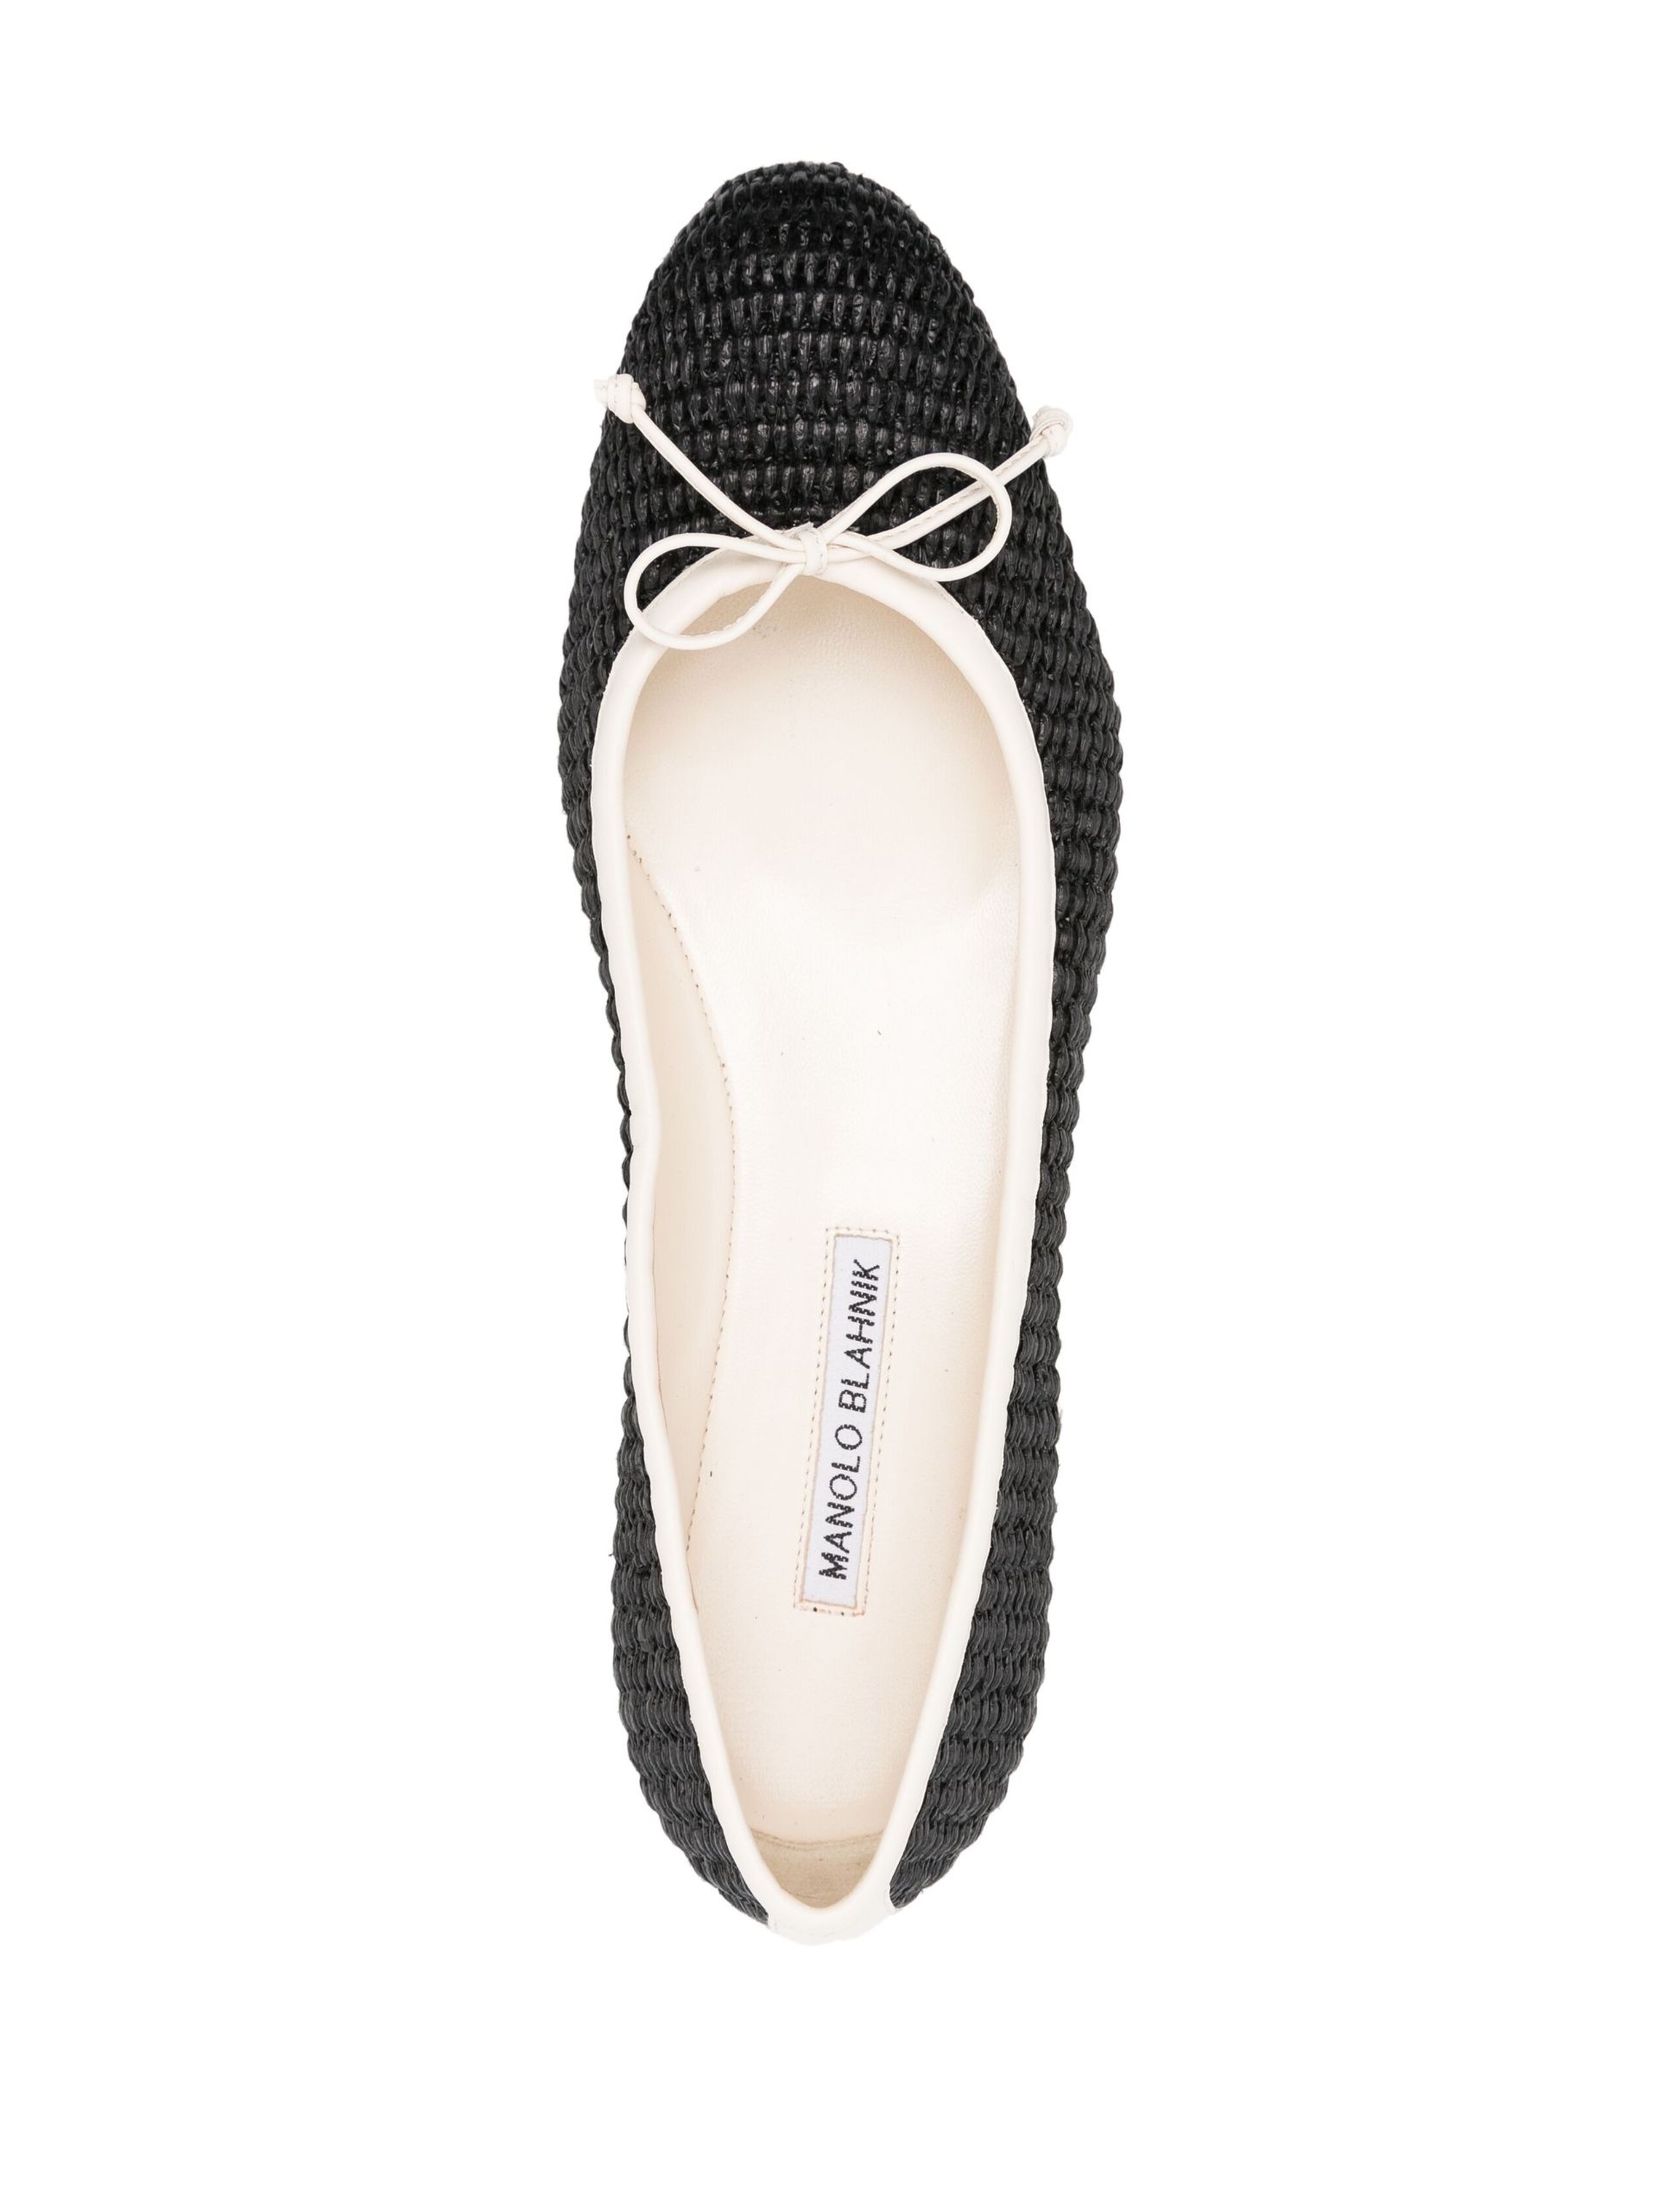 Black Woven Ribbon Detail Ballerina Shoes - 4